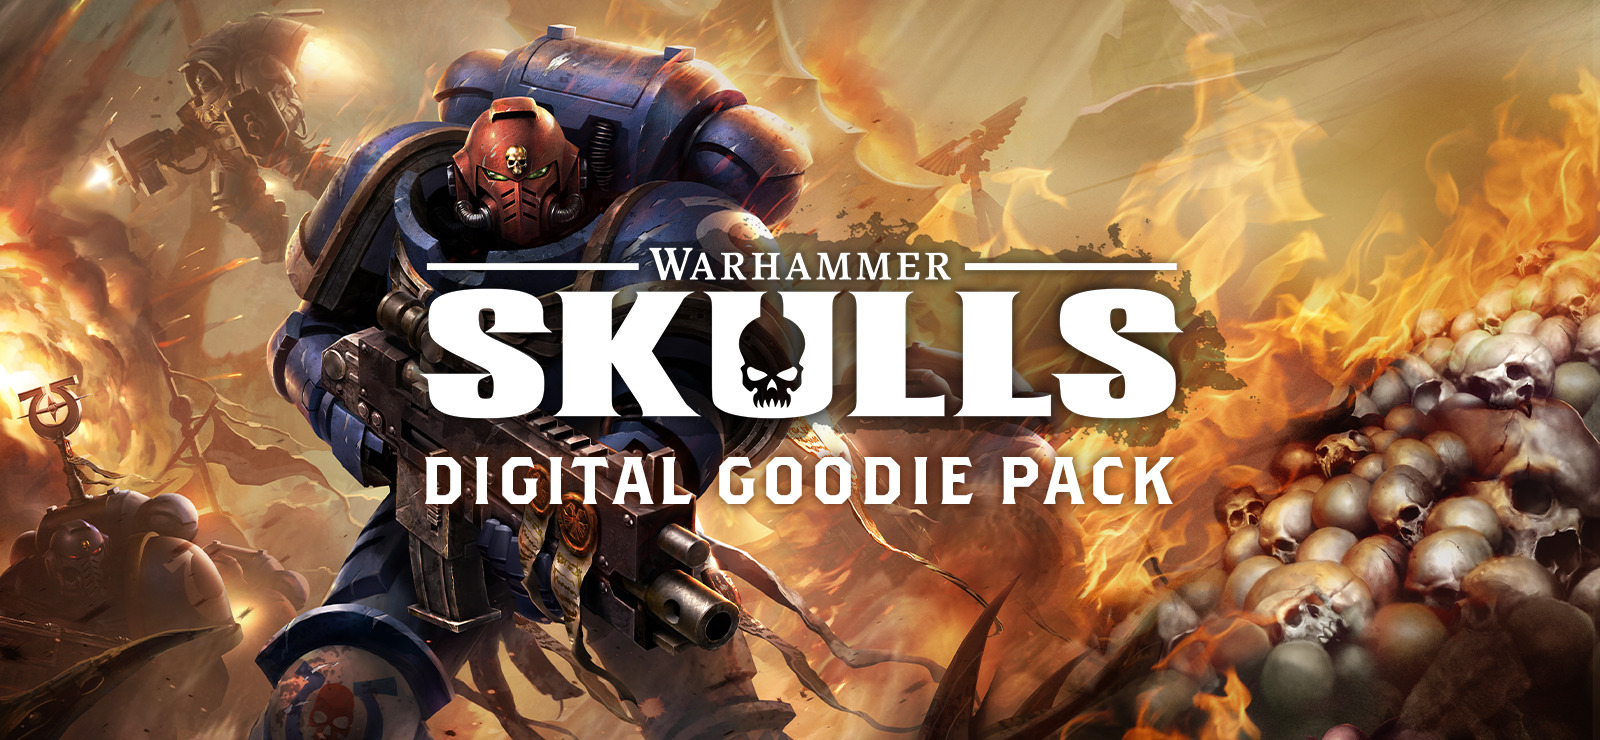 Warhammer Skulls Digital Goodie Pack GOG Database